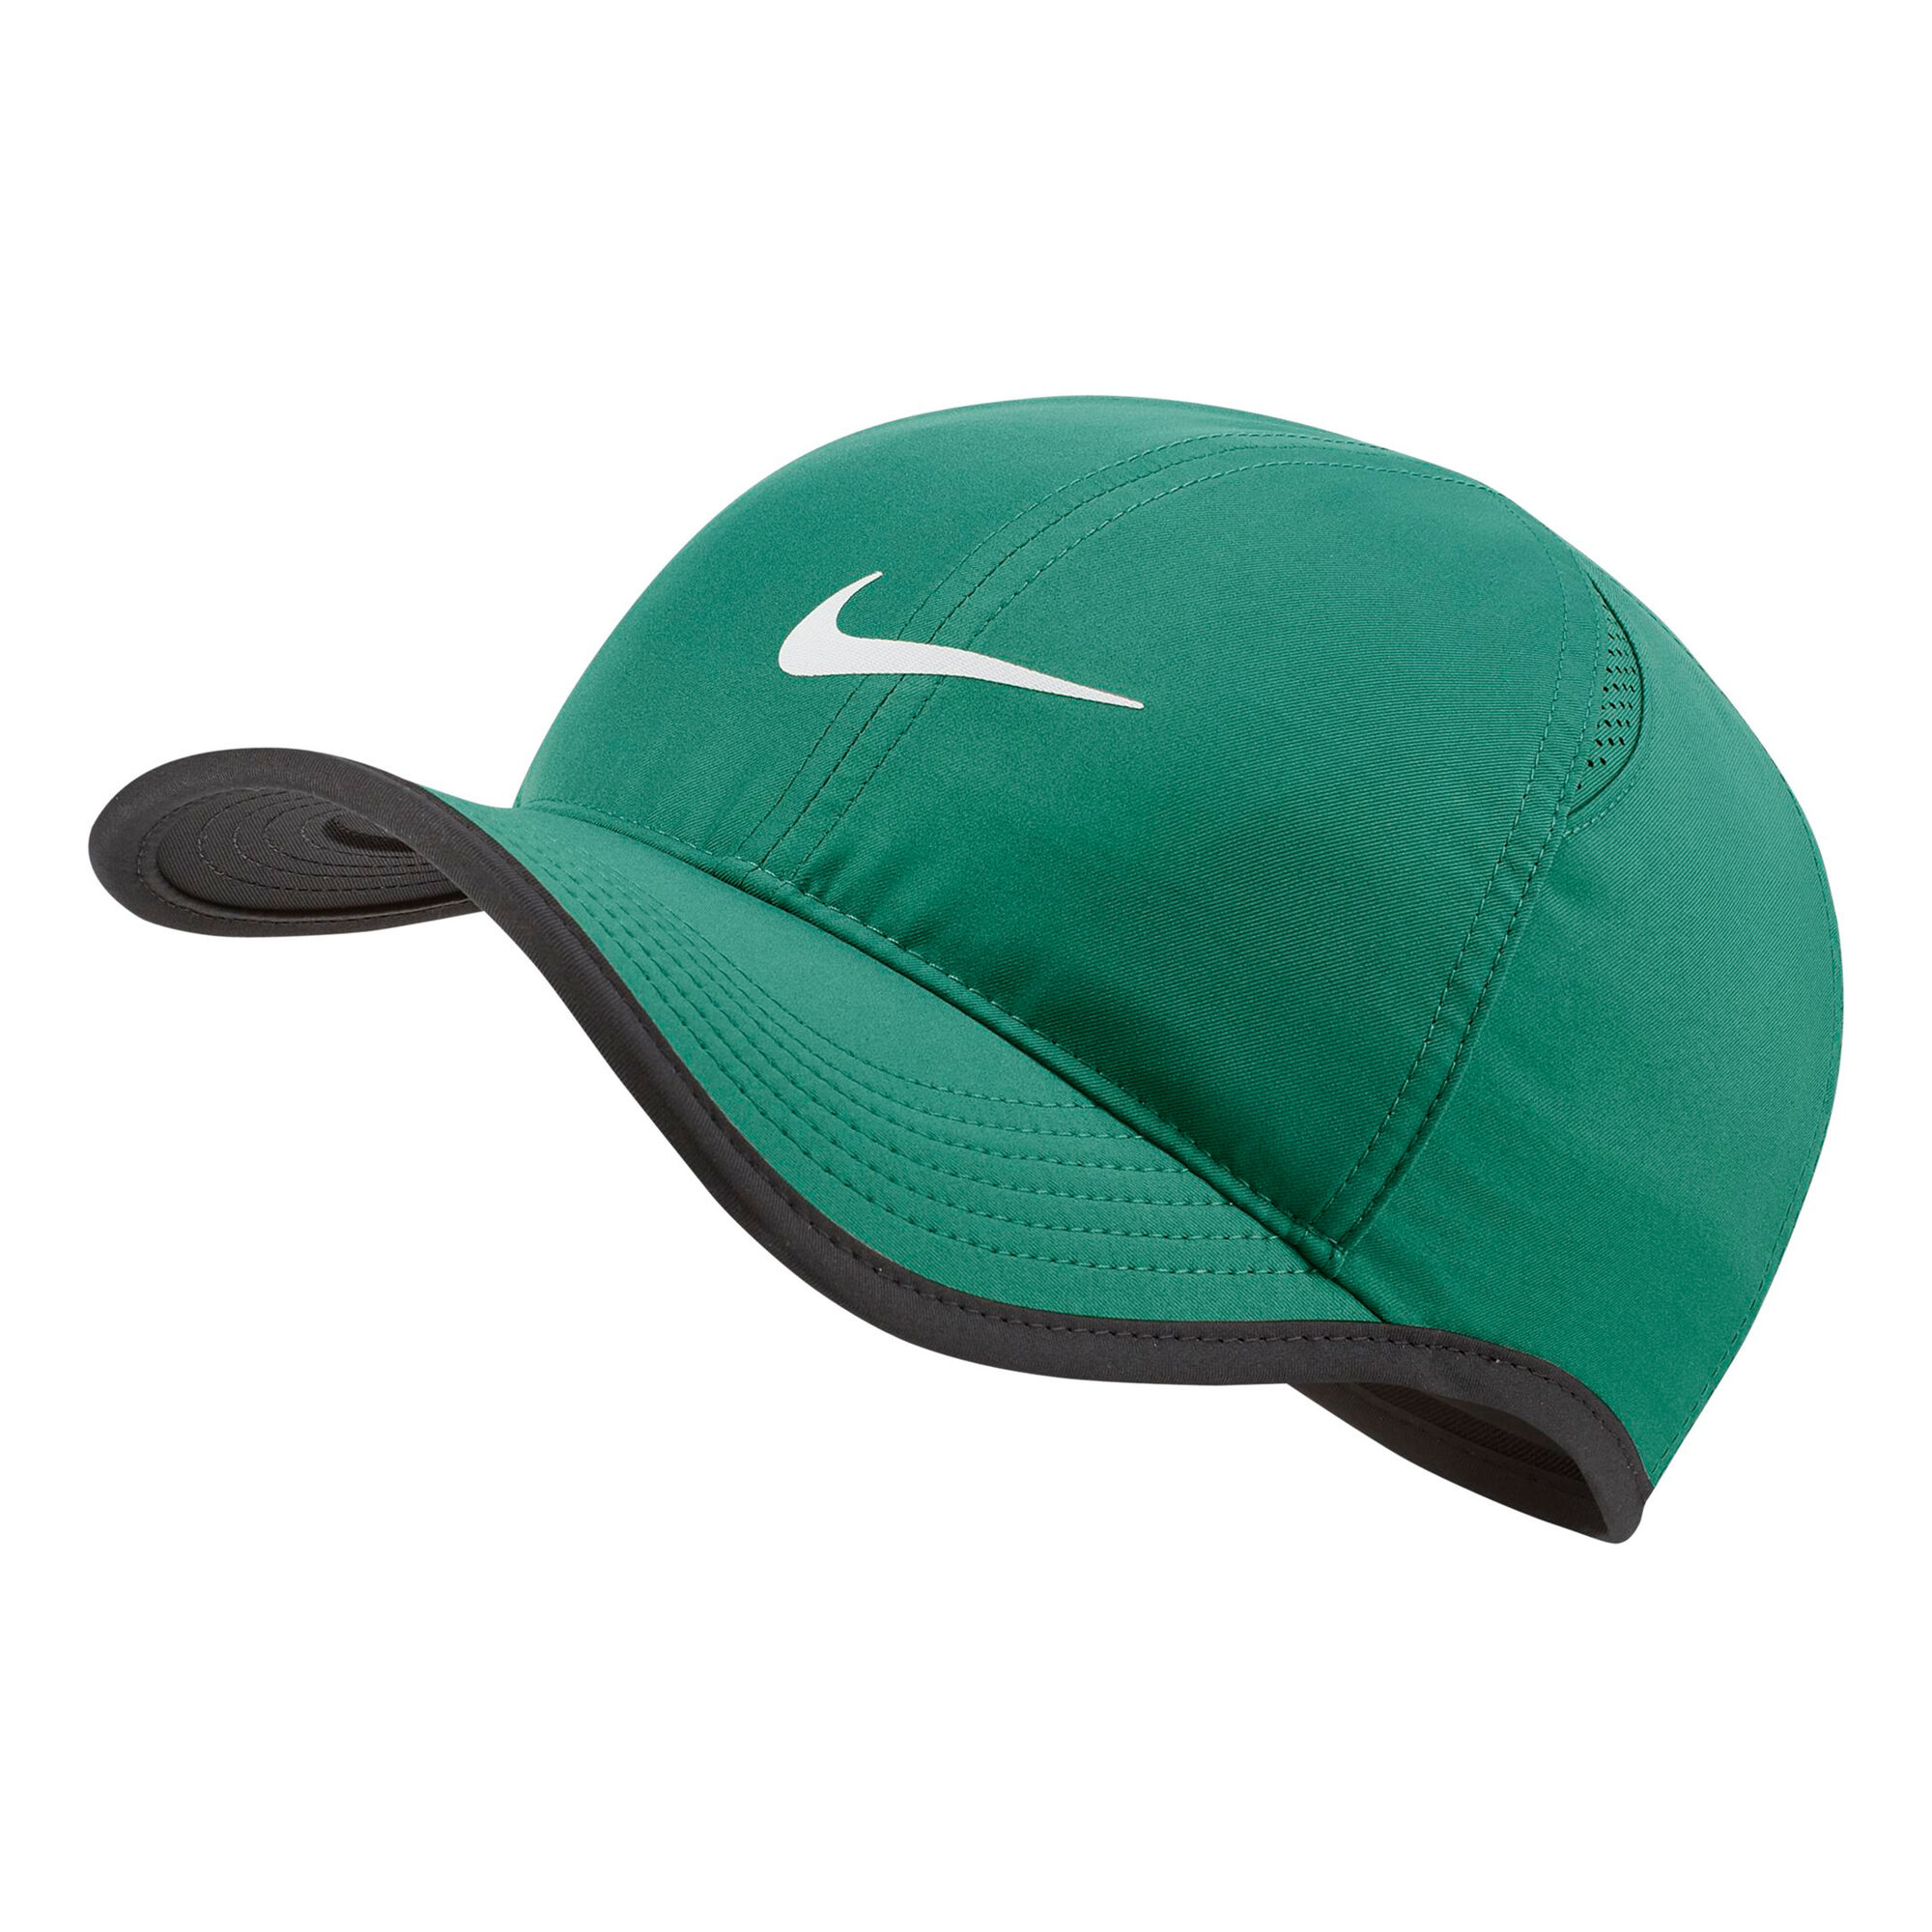 Nike Gorra - Verde, Negro compra online | Tennis-Point